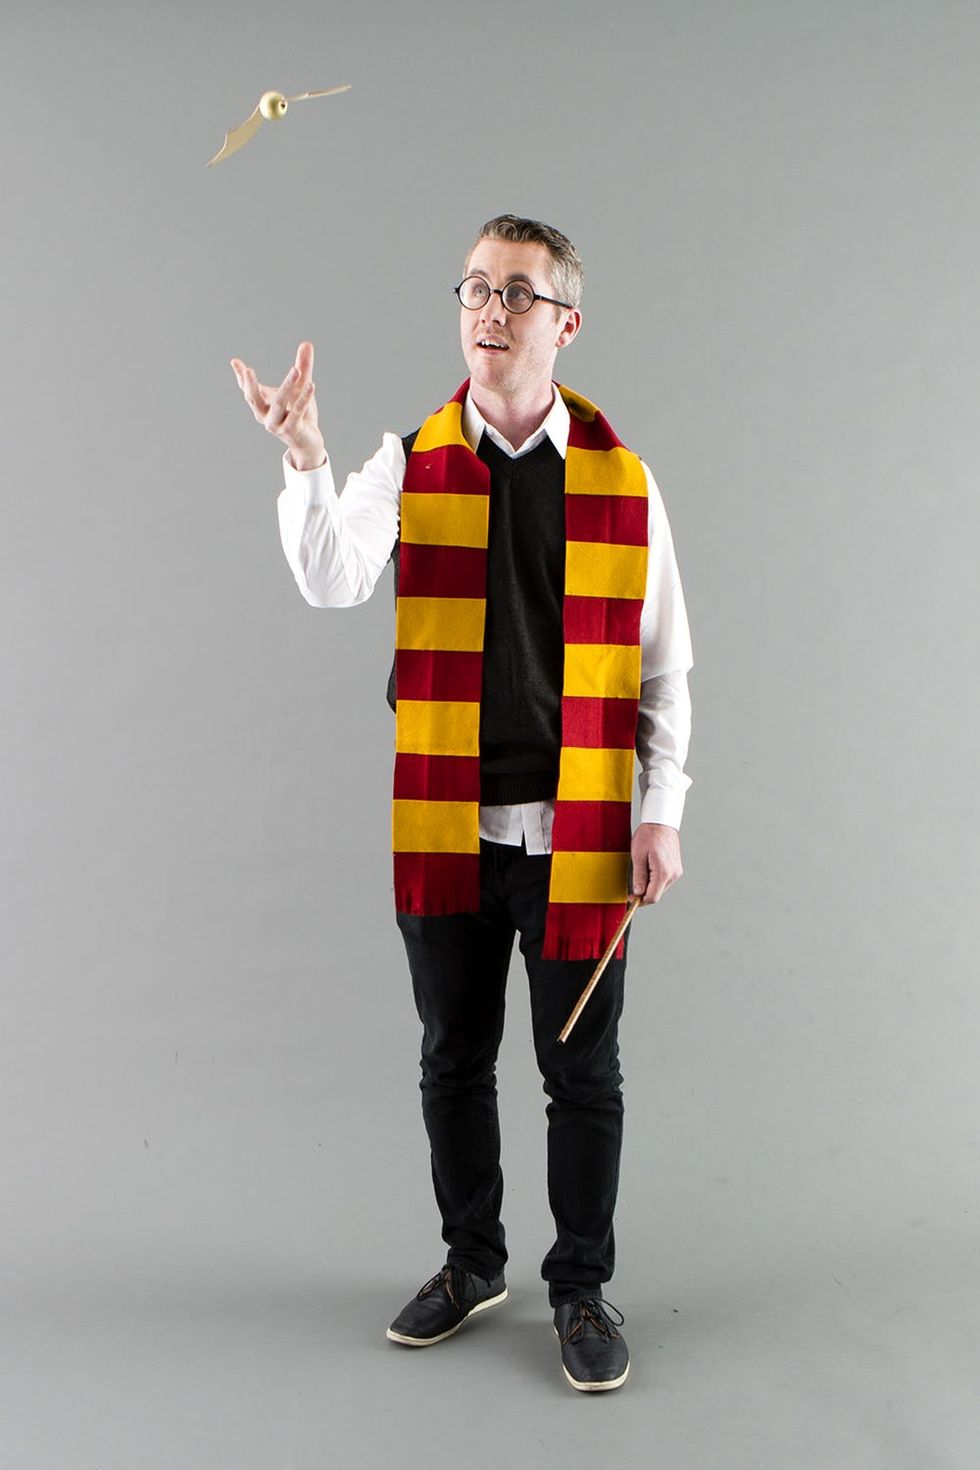 Idées de Costumes Harry Potter Magiques! - Deguisement Halloween